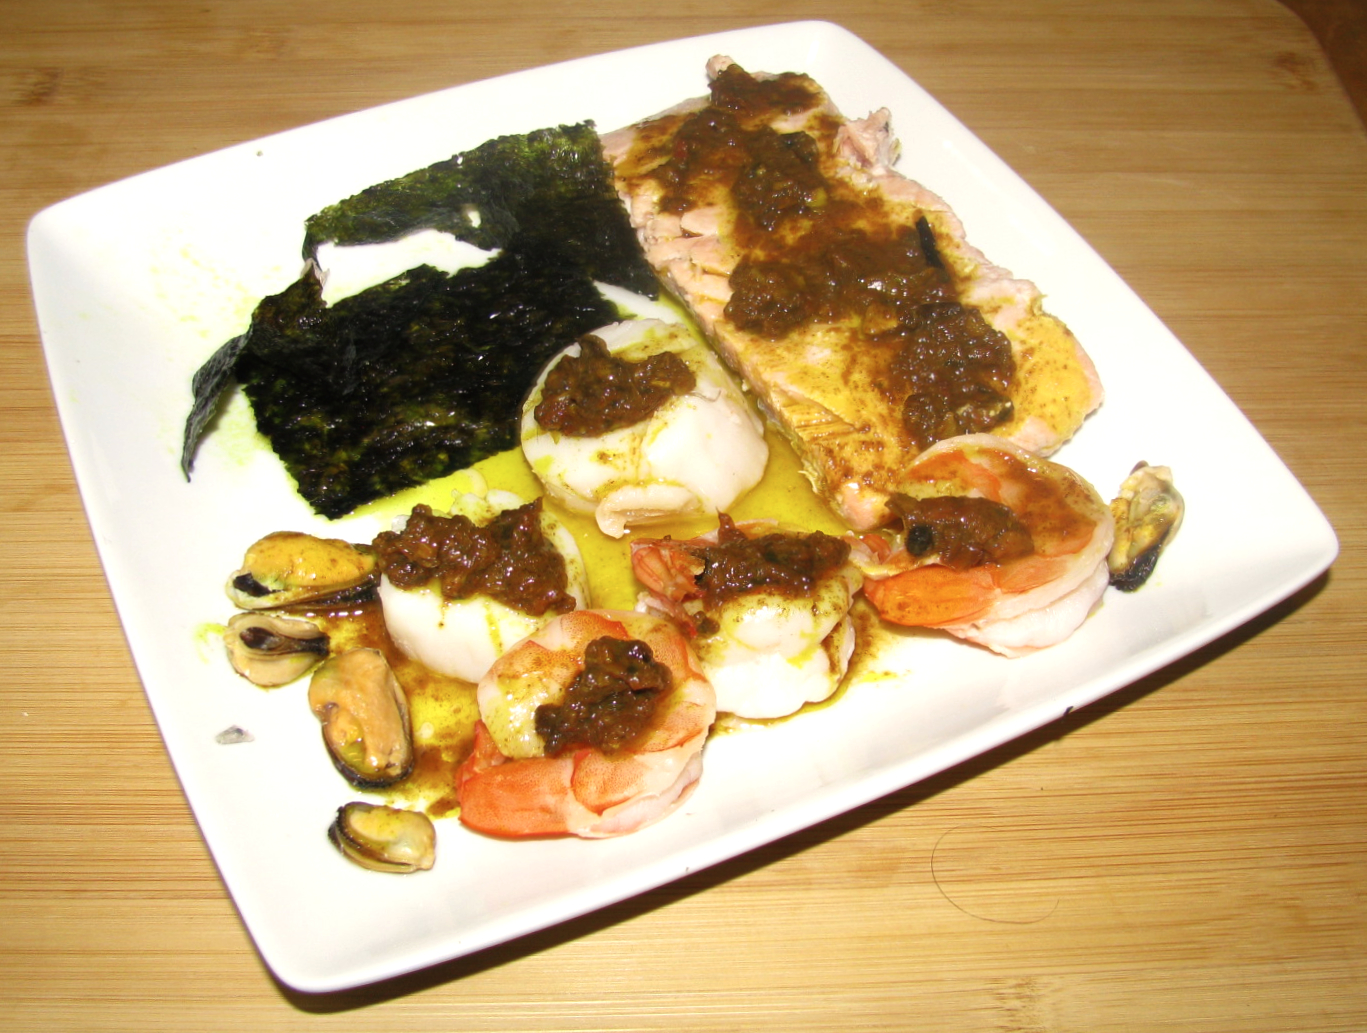 Spice Islands Seafood Plate